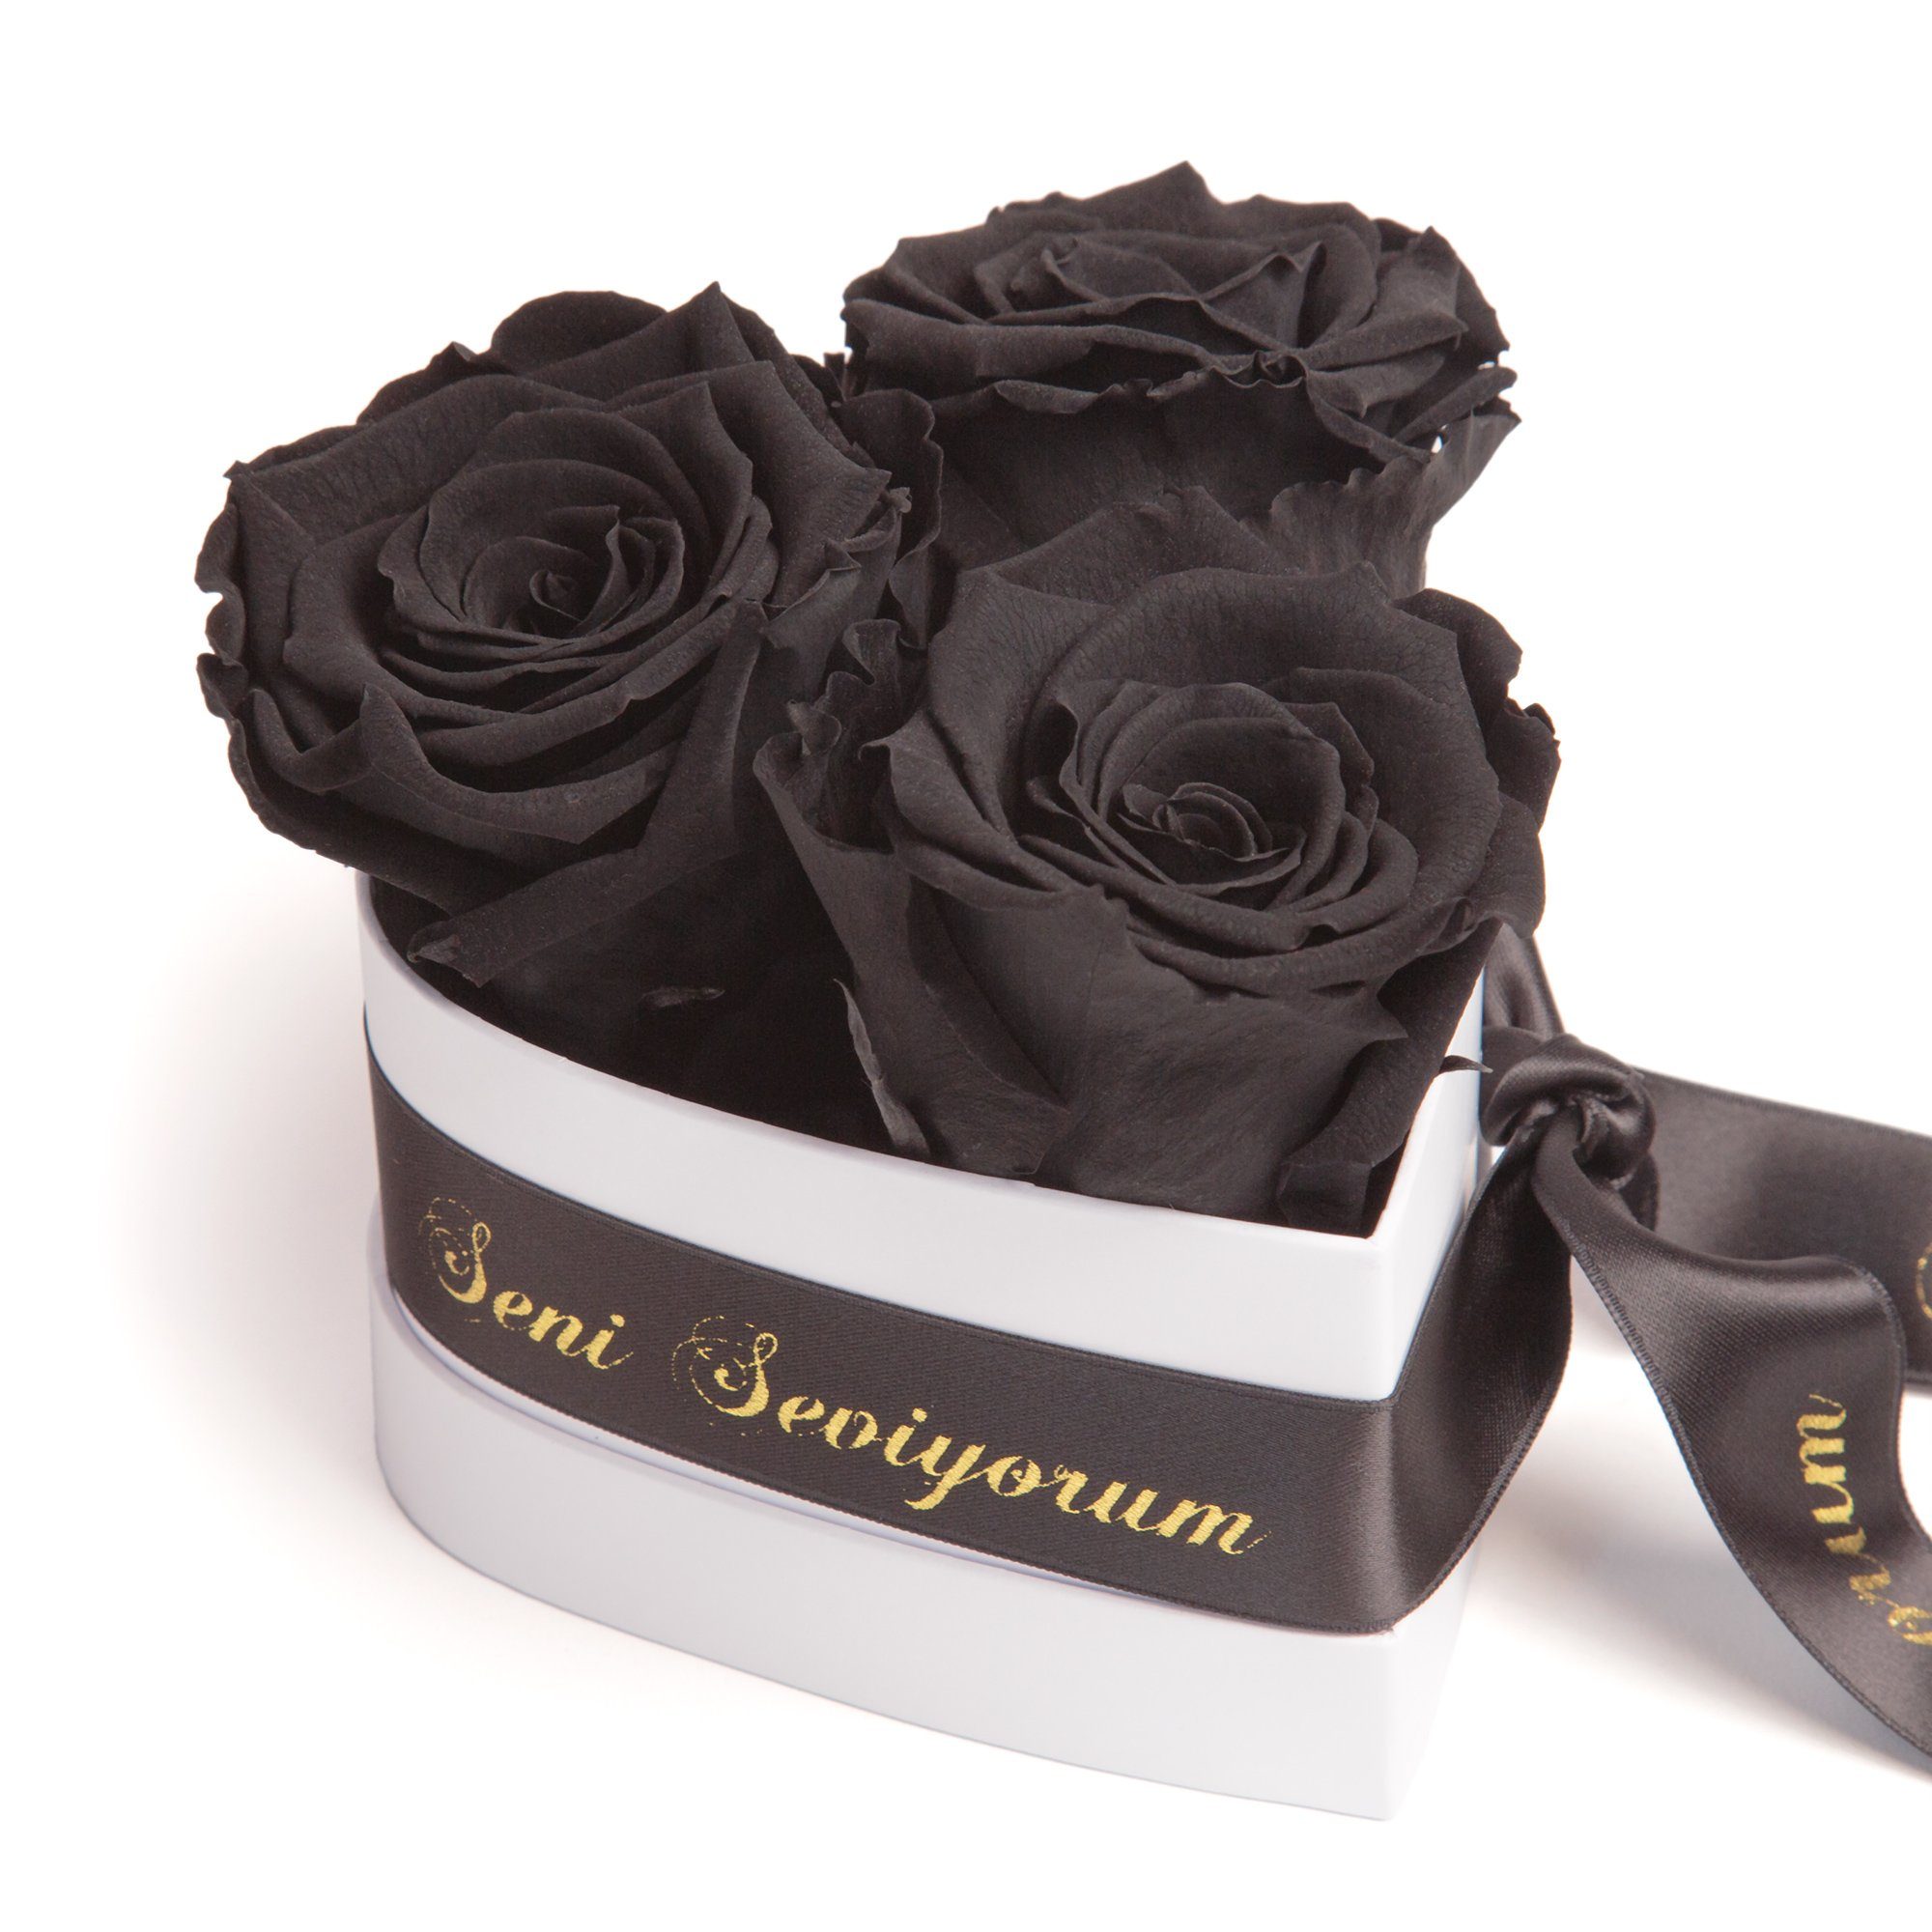 Kunstblume Seni Seviyorum Infinity Rosenbox Herz 3 echte Rosen konserviert Rose, ROSEMARIE SCHULZ Heidelberg, Höhe 10 cm, echte Rosen lang haltbar Schwarz